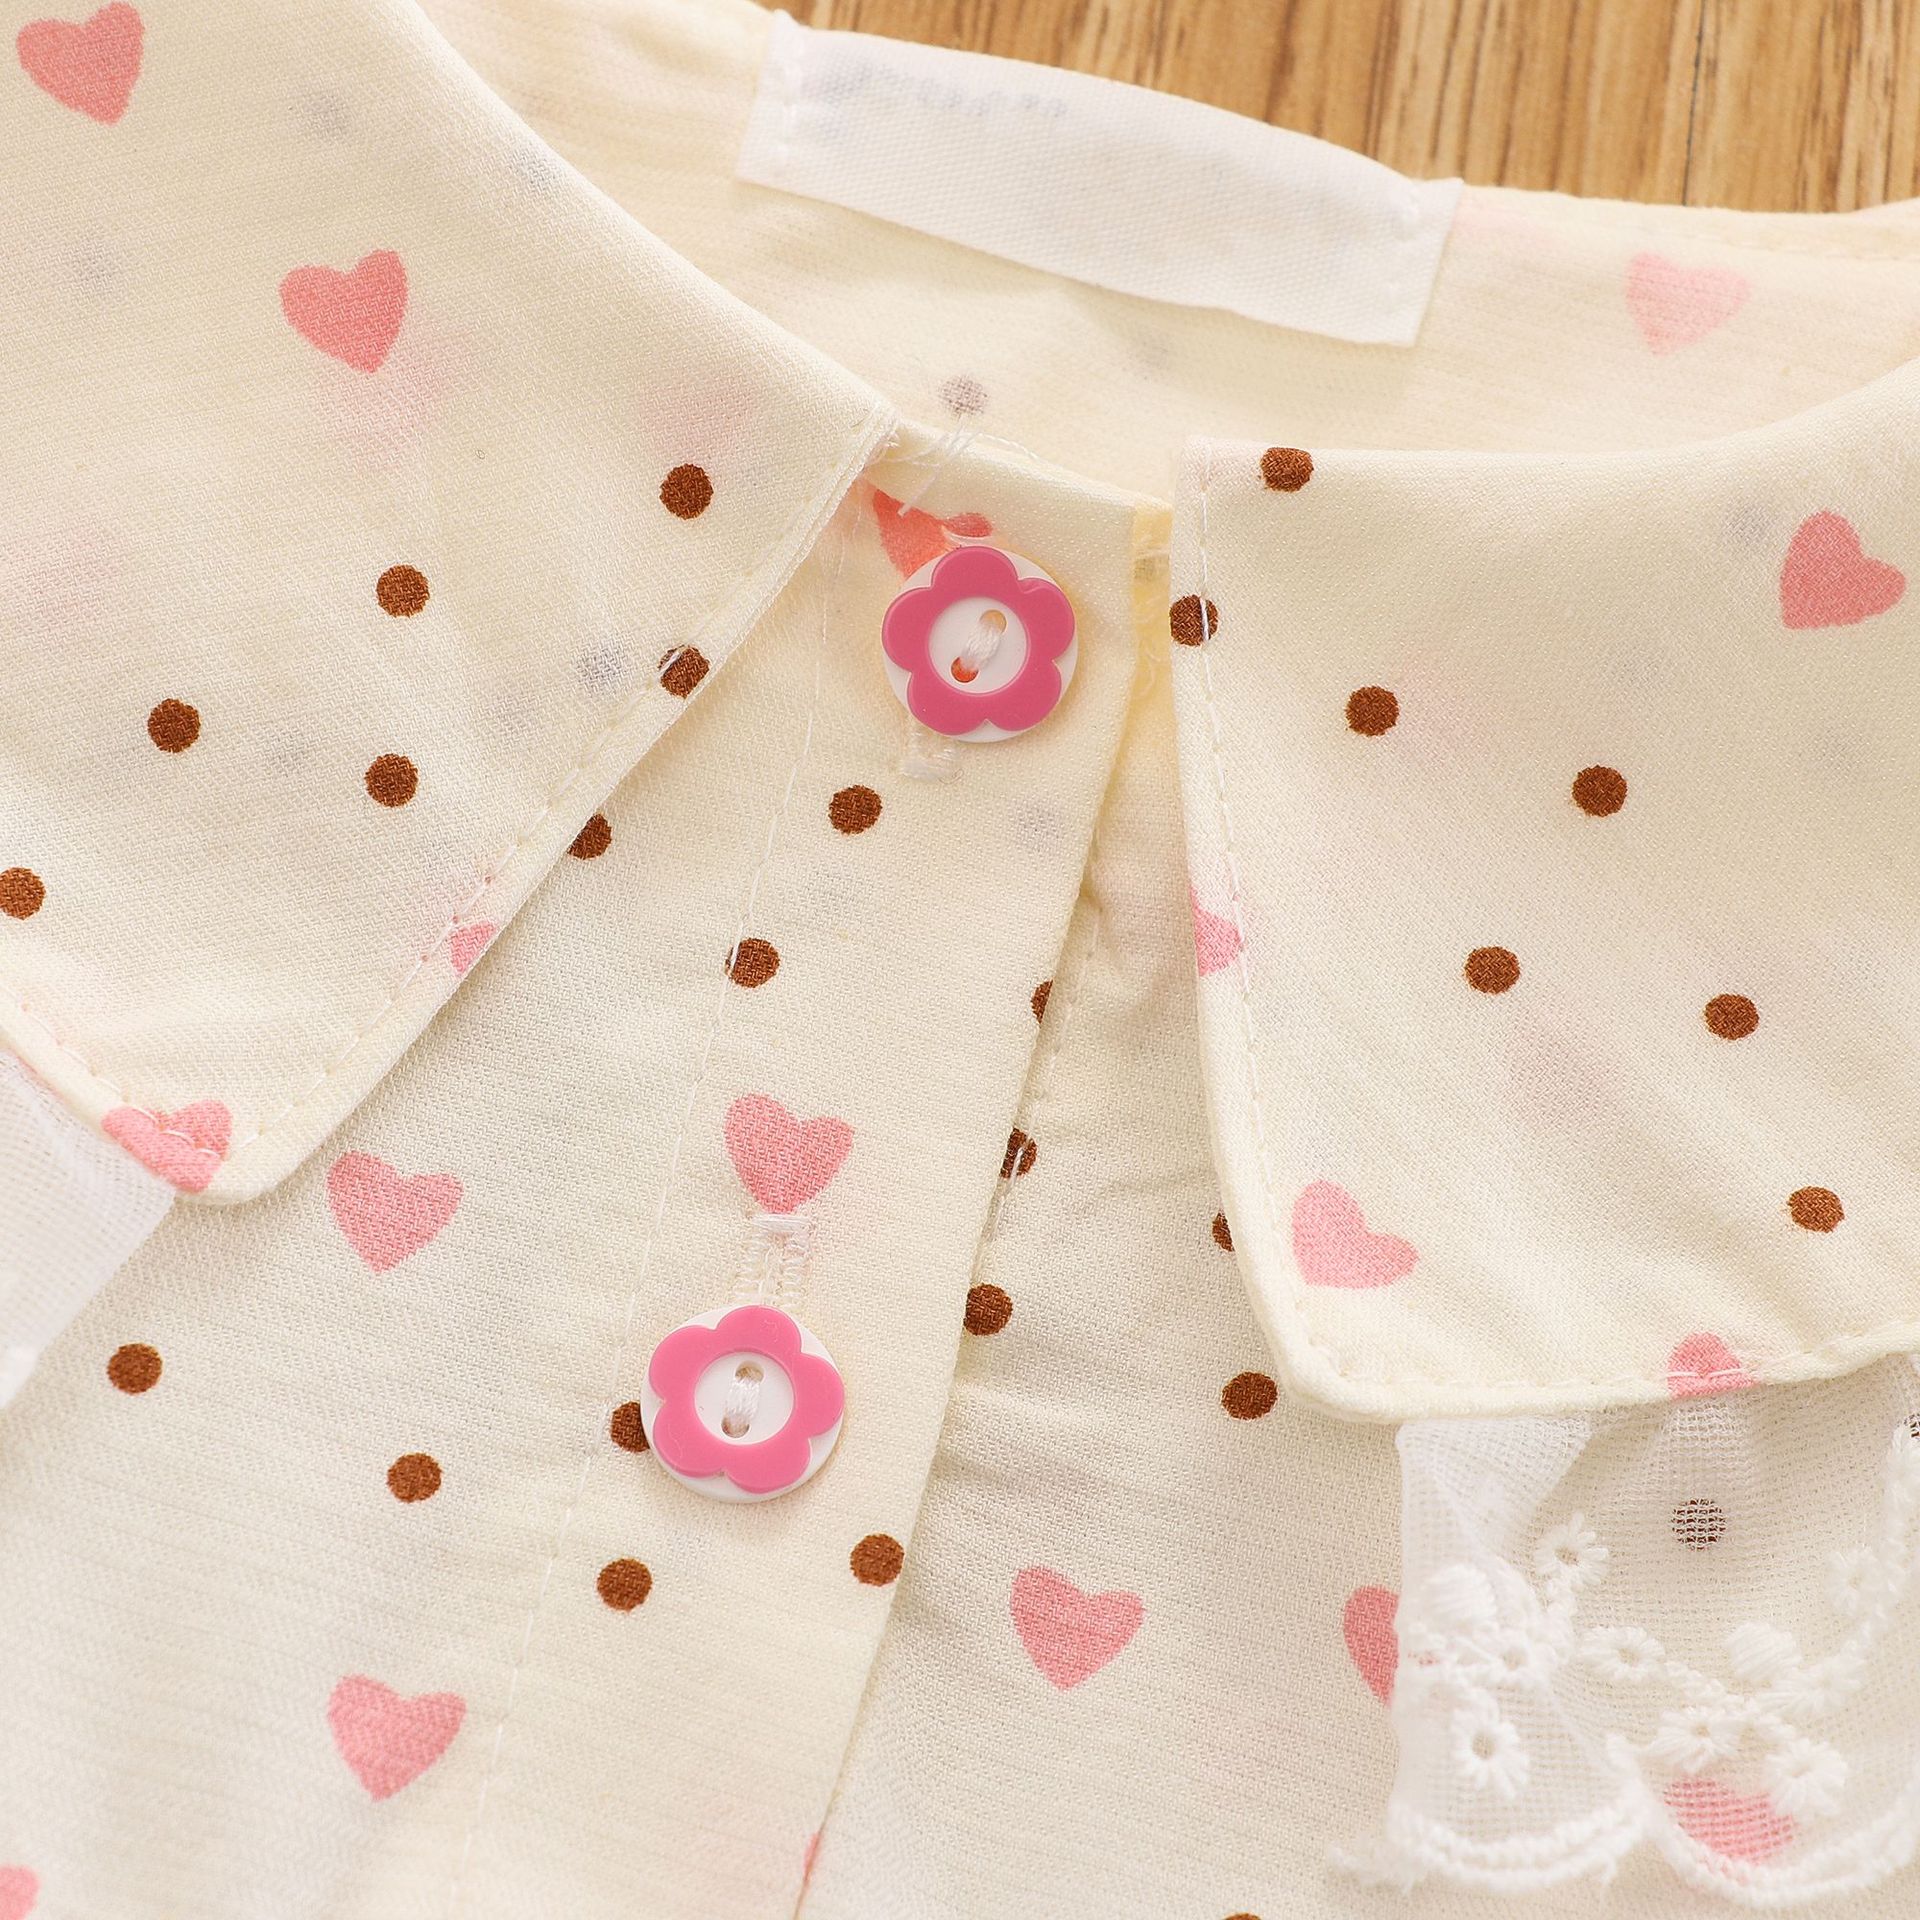 2021 spring new arrival toddler little girls plaid shirt tops infant kids children casual clothing set